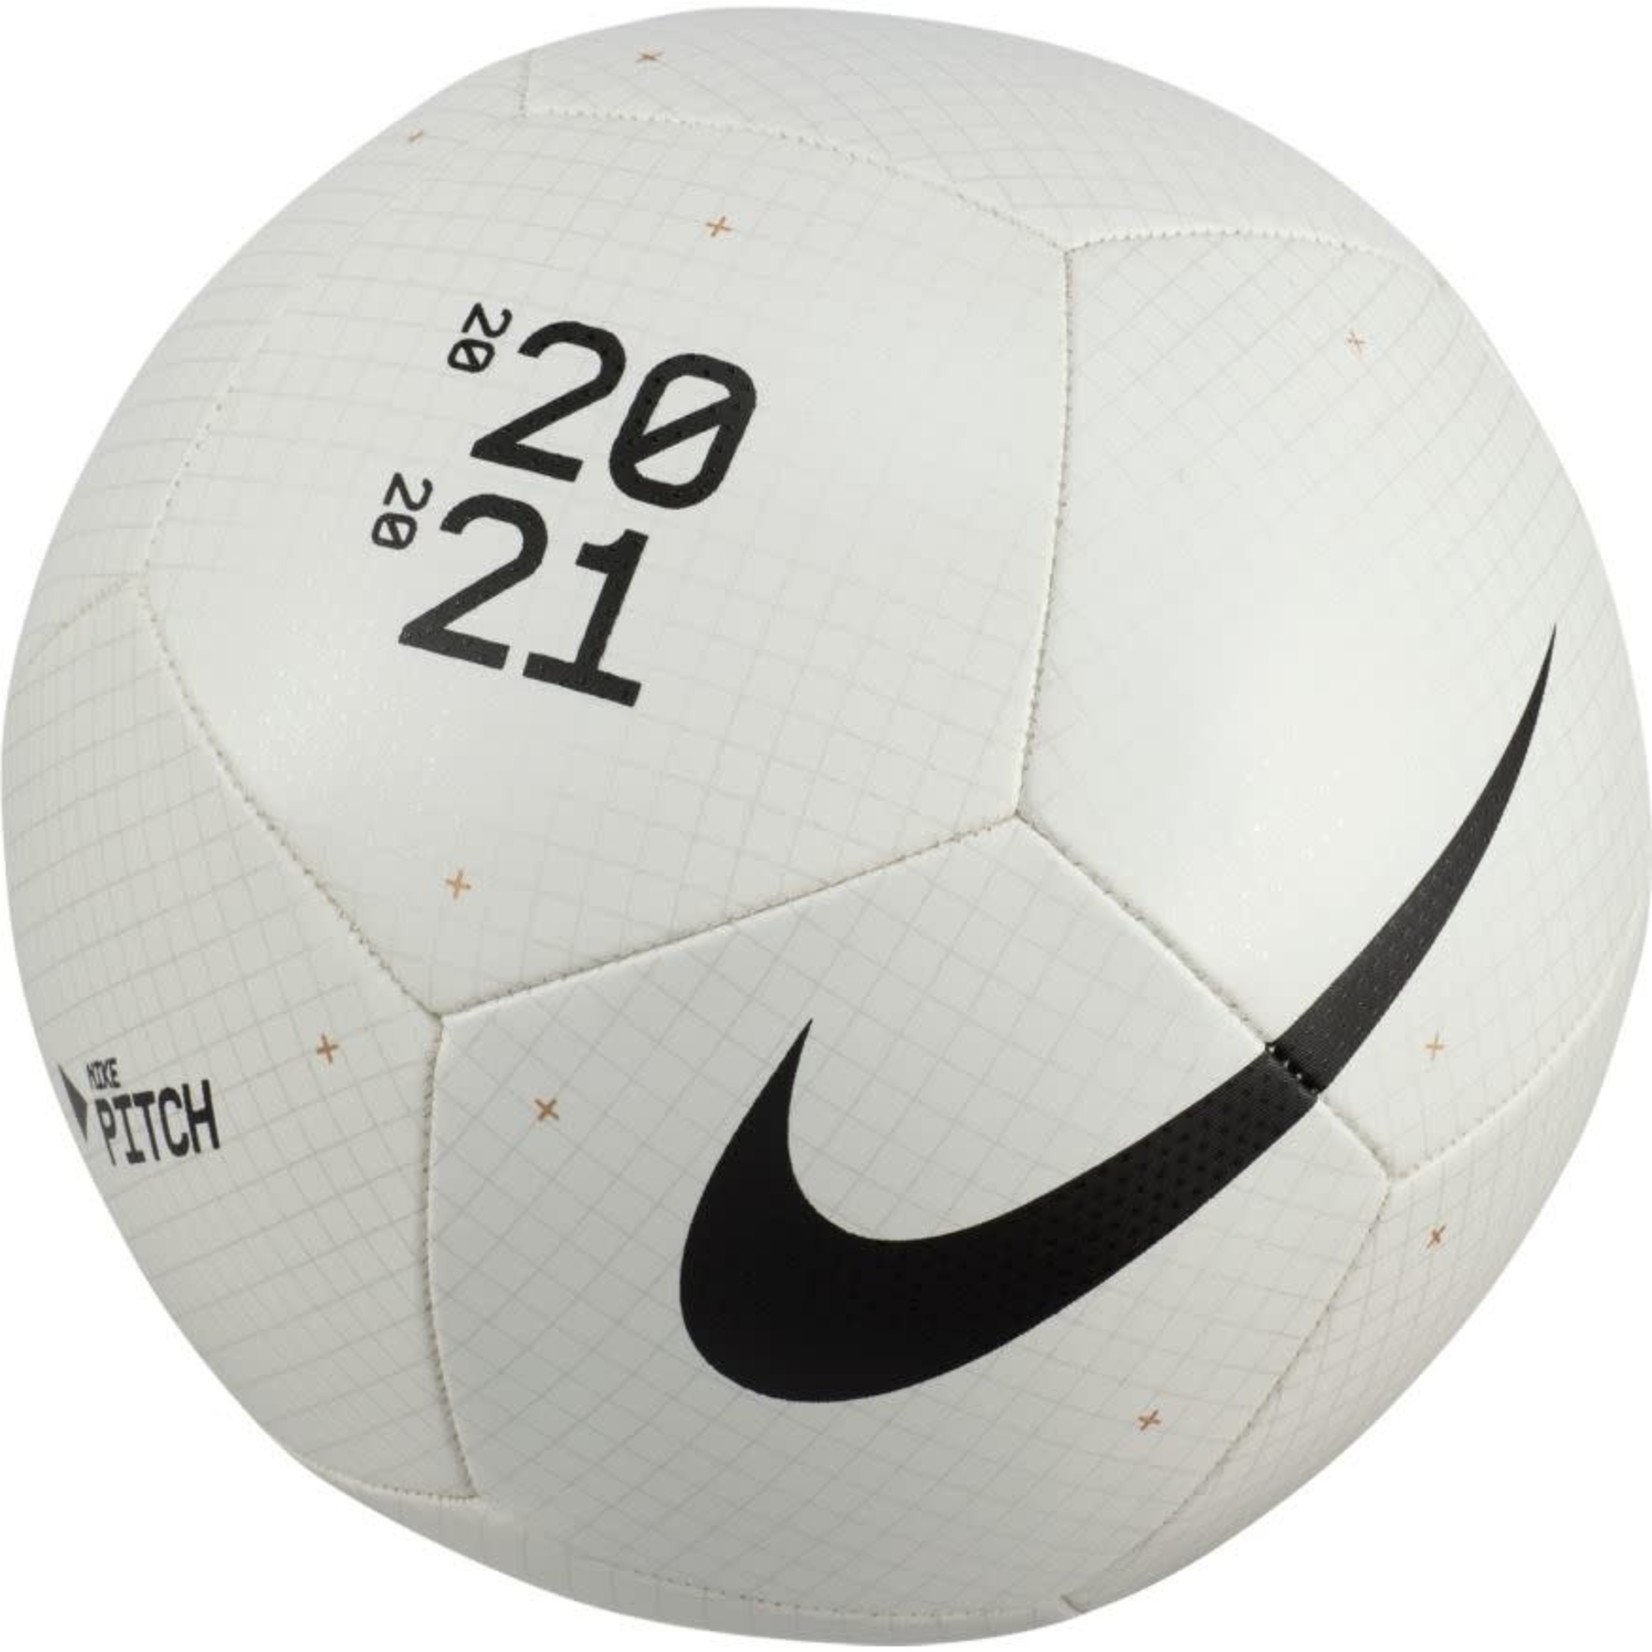 En cualquier momento volatilidad olvidar PITCH BALL 20/21 - SoccerWorld - SoccerWorld